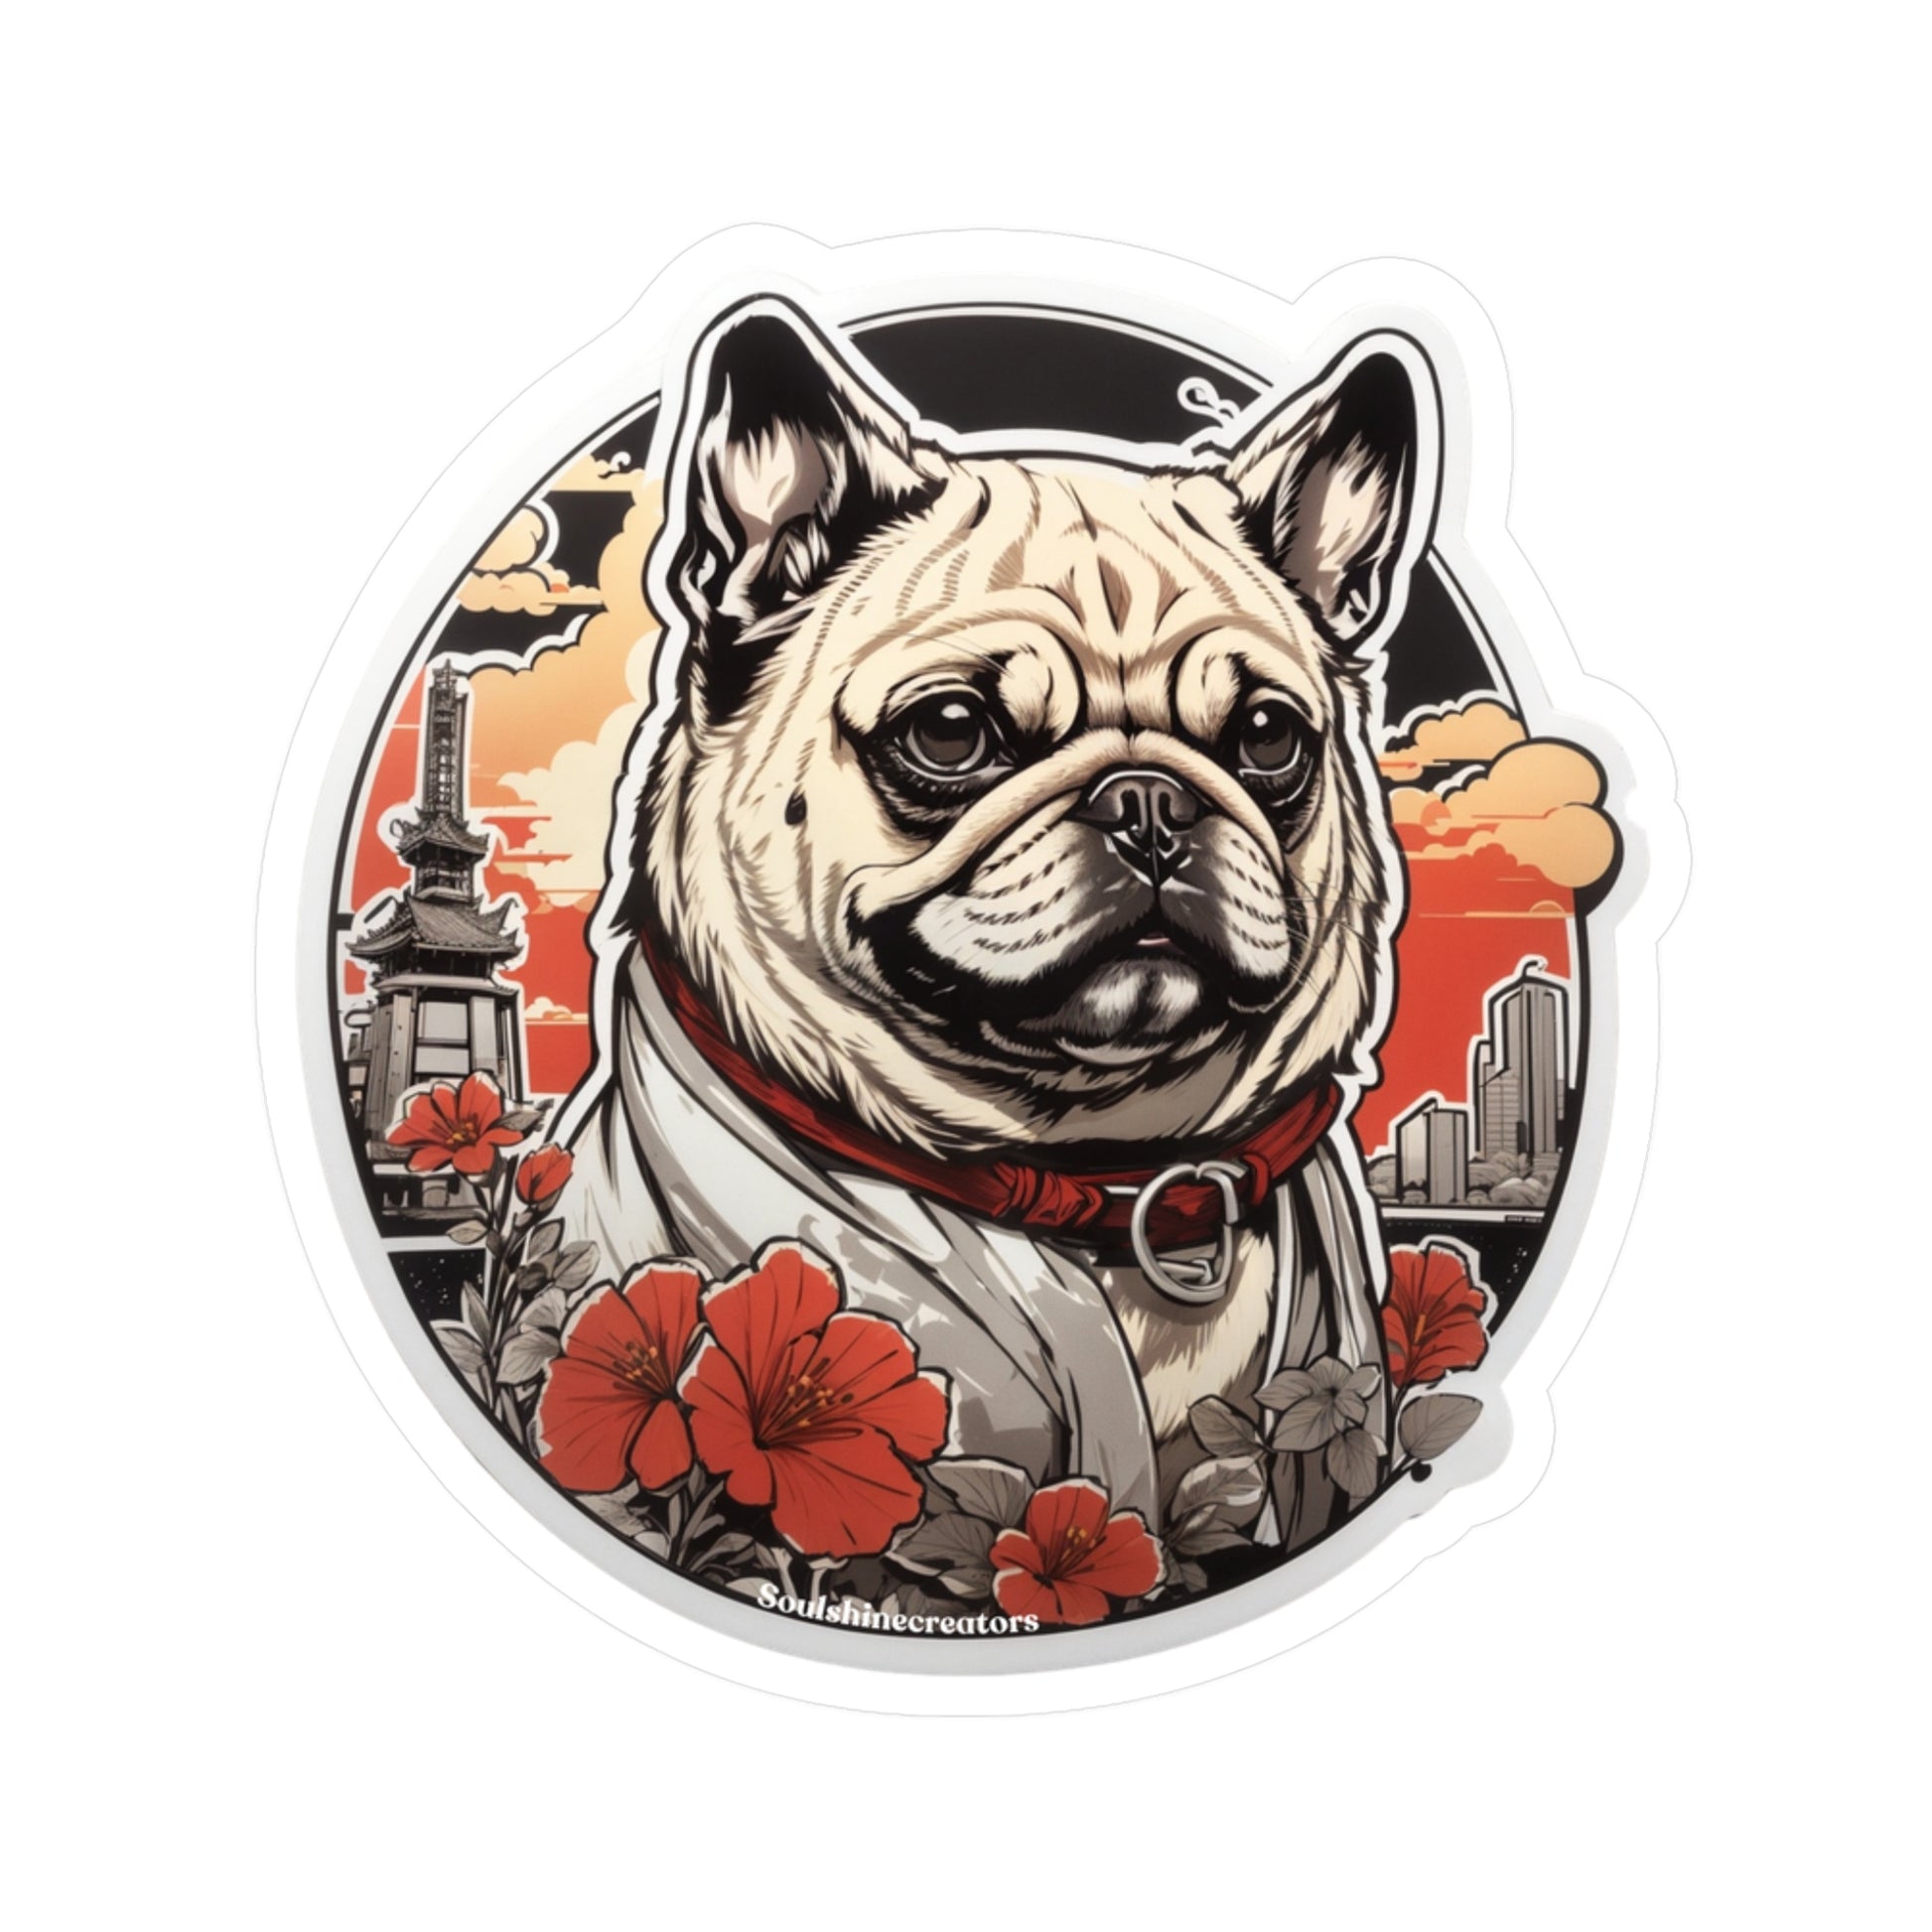 Power Animal Dog - Anime Inspired Dog Sticker - Pug